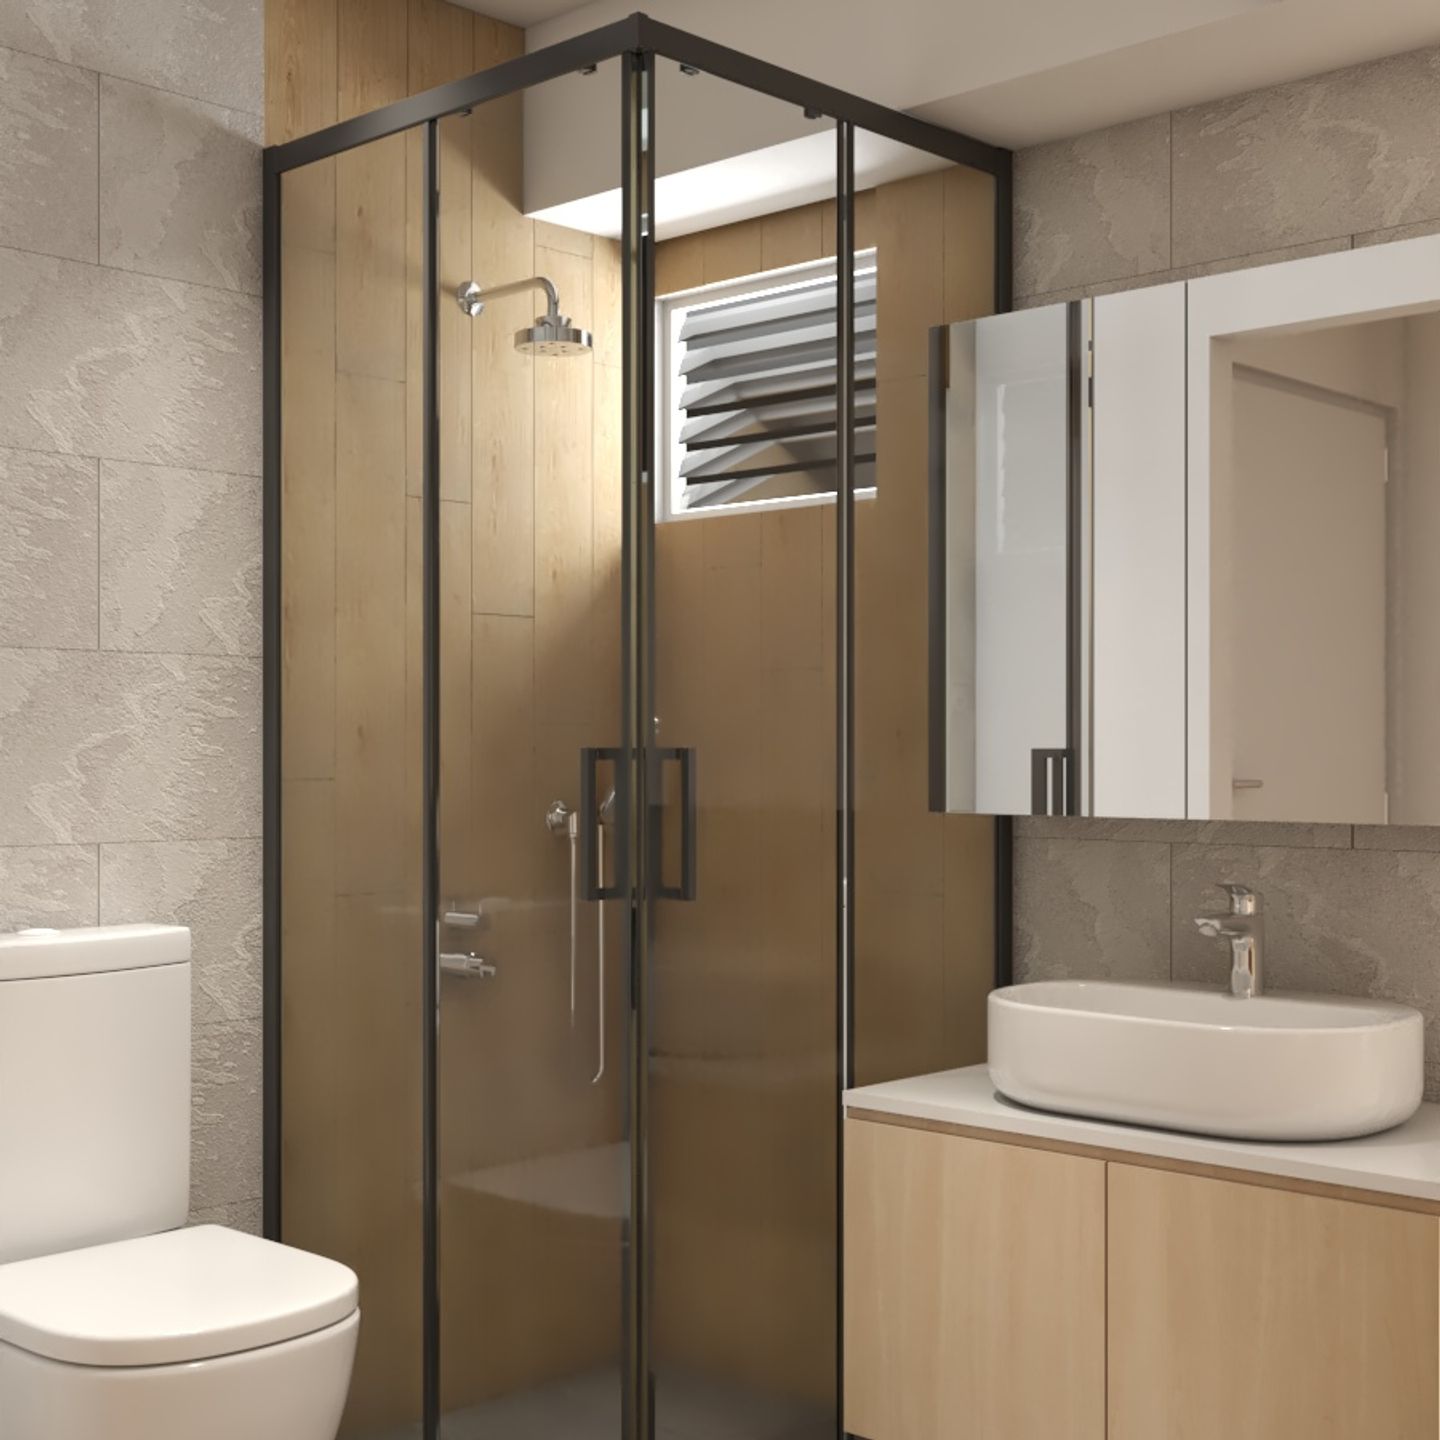 Grey And Brown Bathroom Design - Livspace